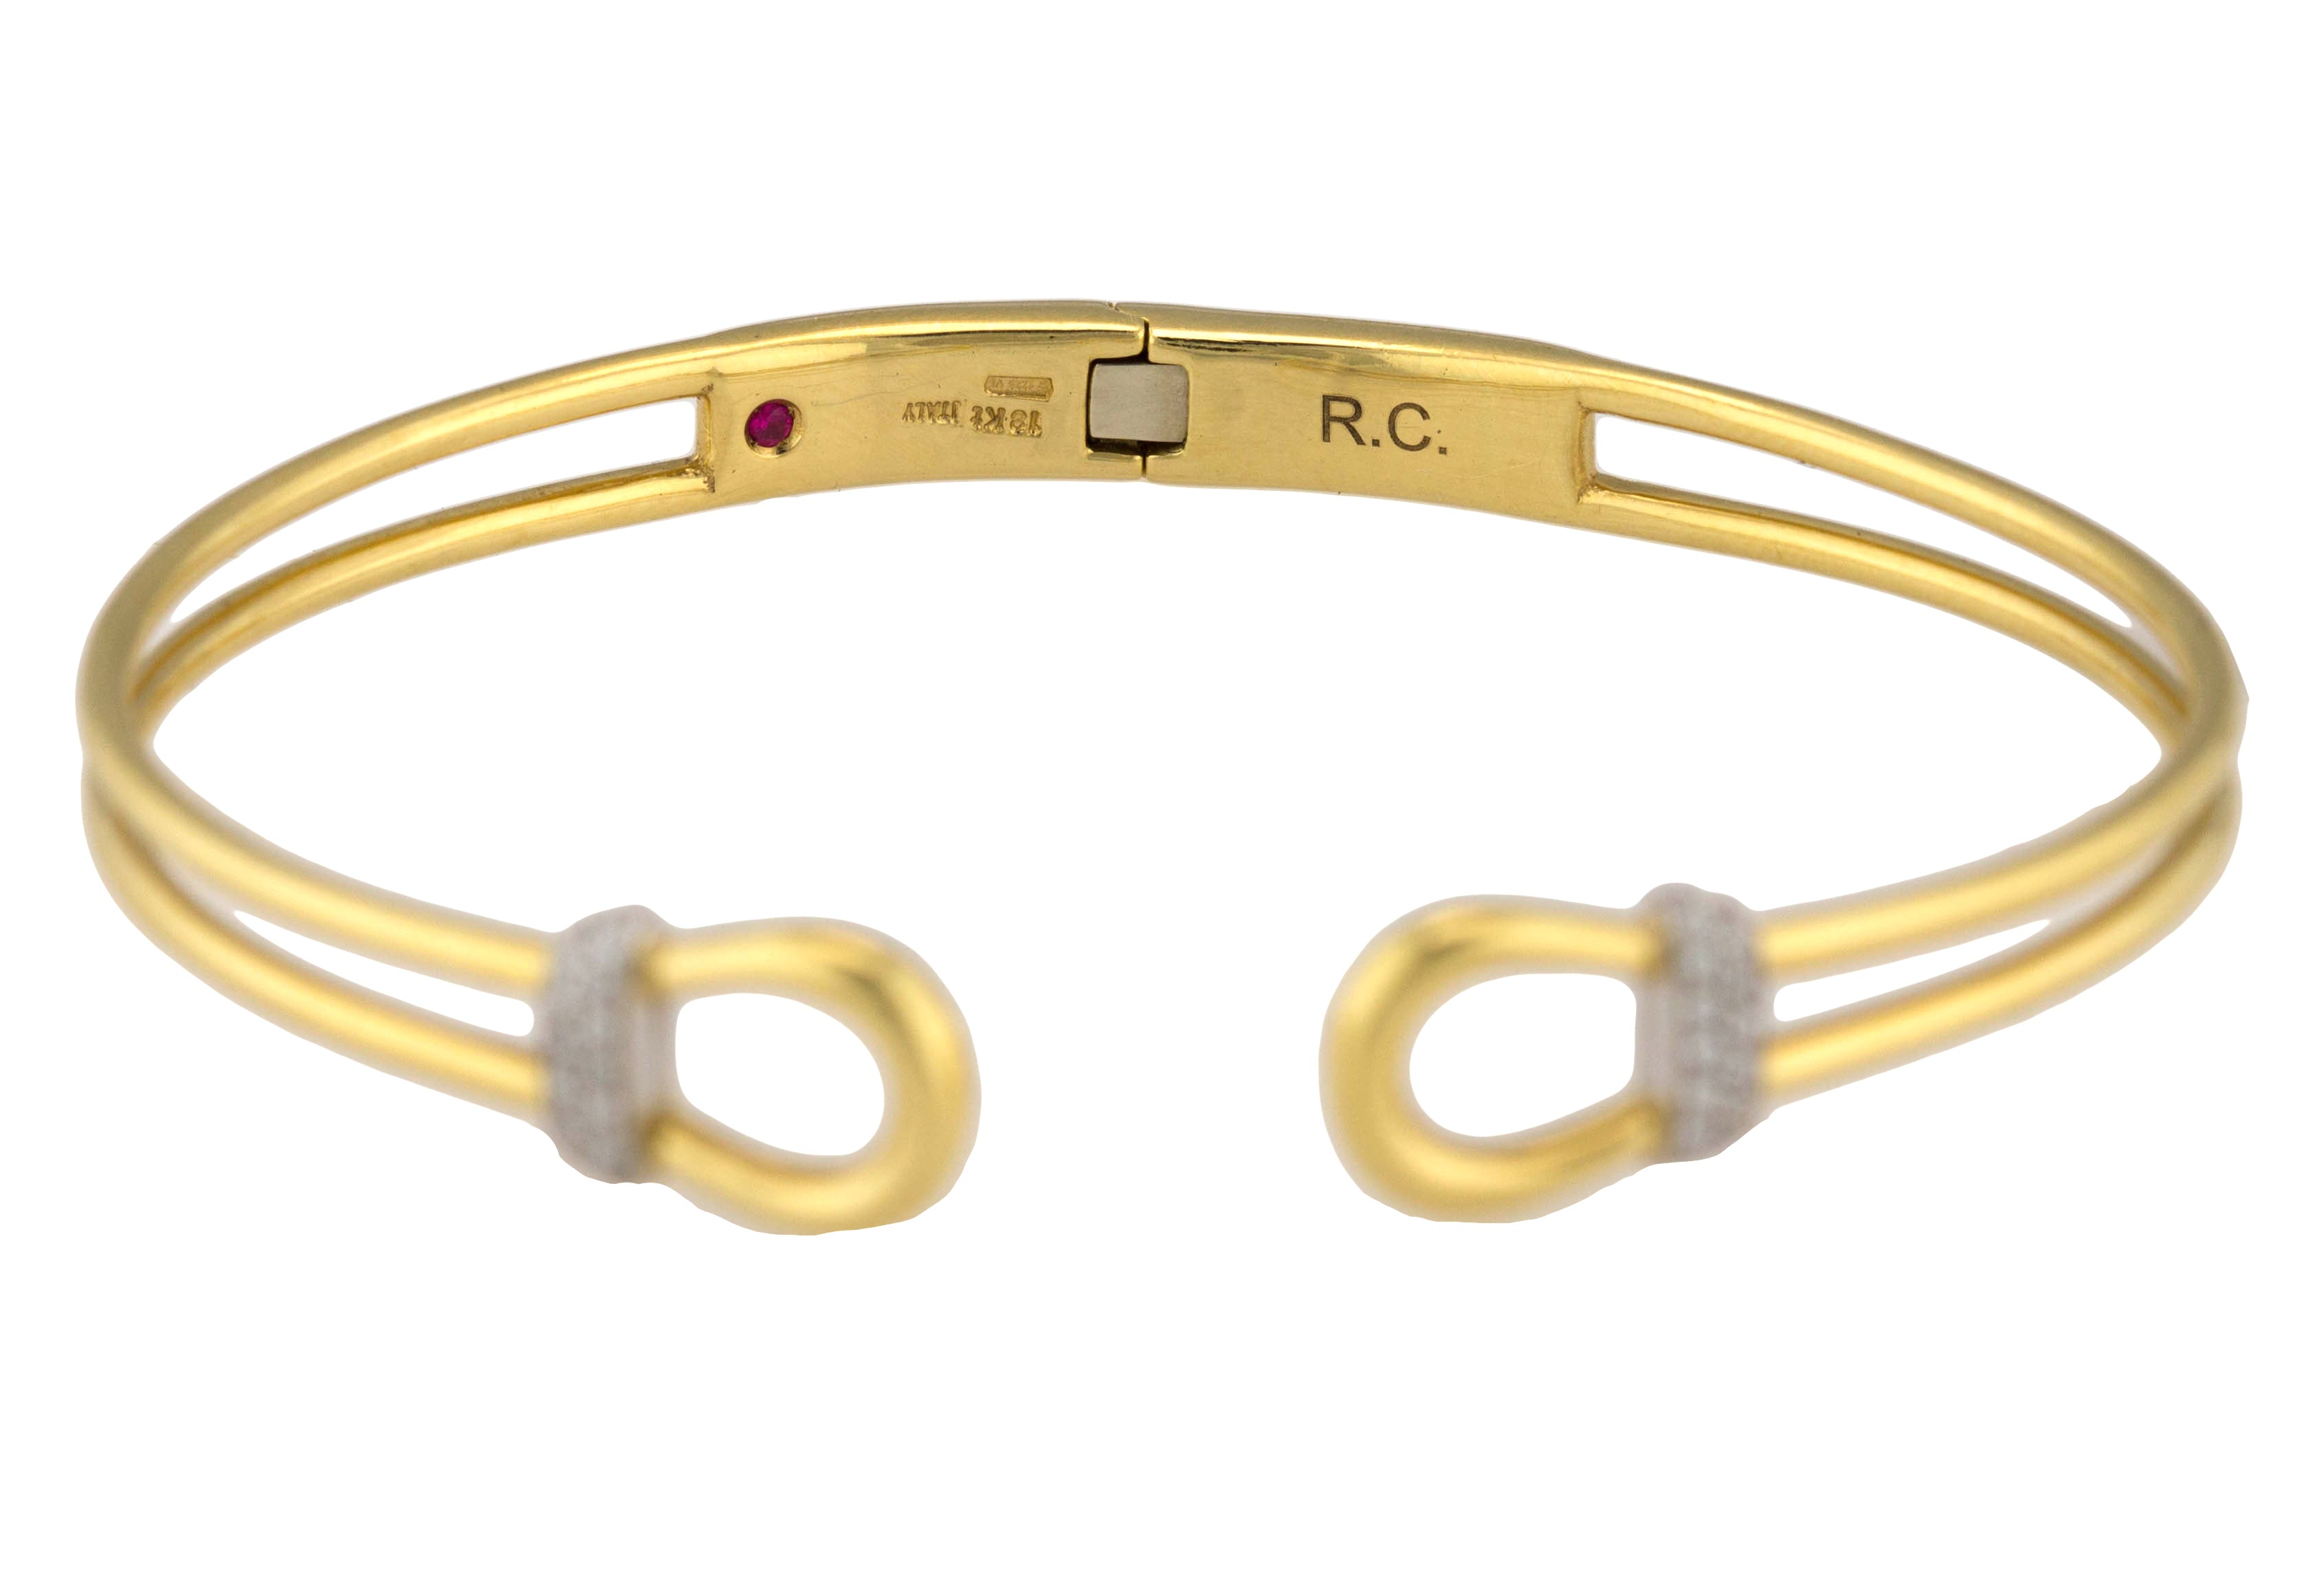 Roberto Coin 18K White Yellow Gold Classic Parisienne Diamond Open Cuff Bracelet